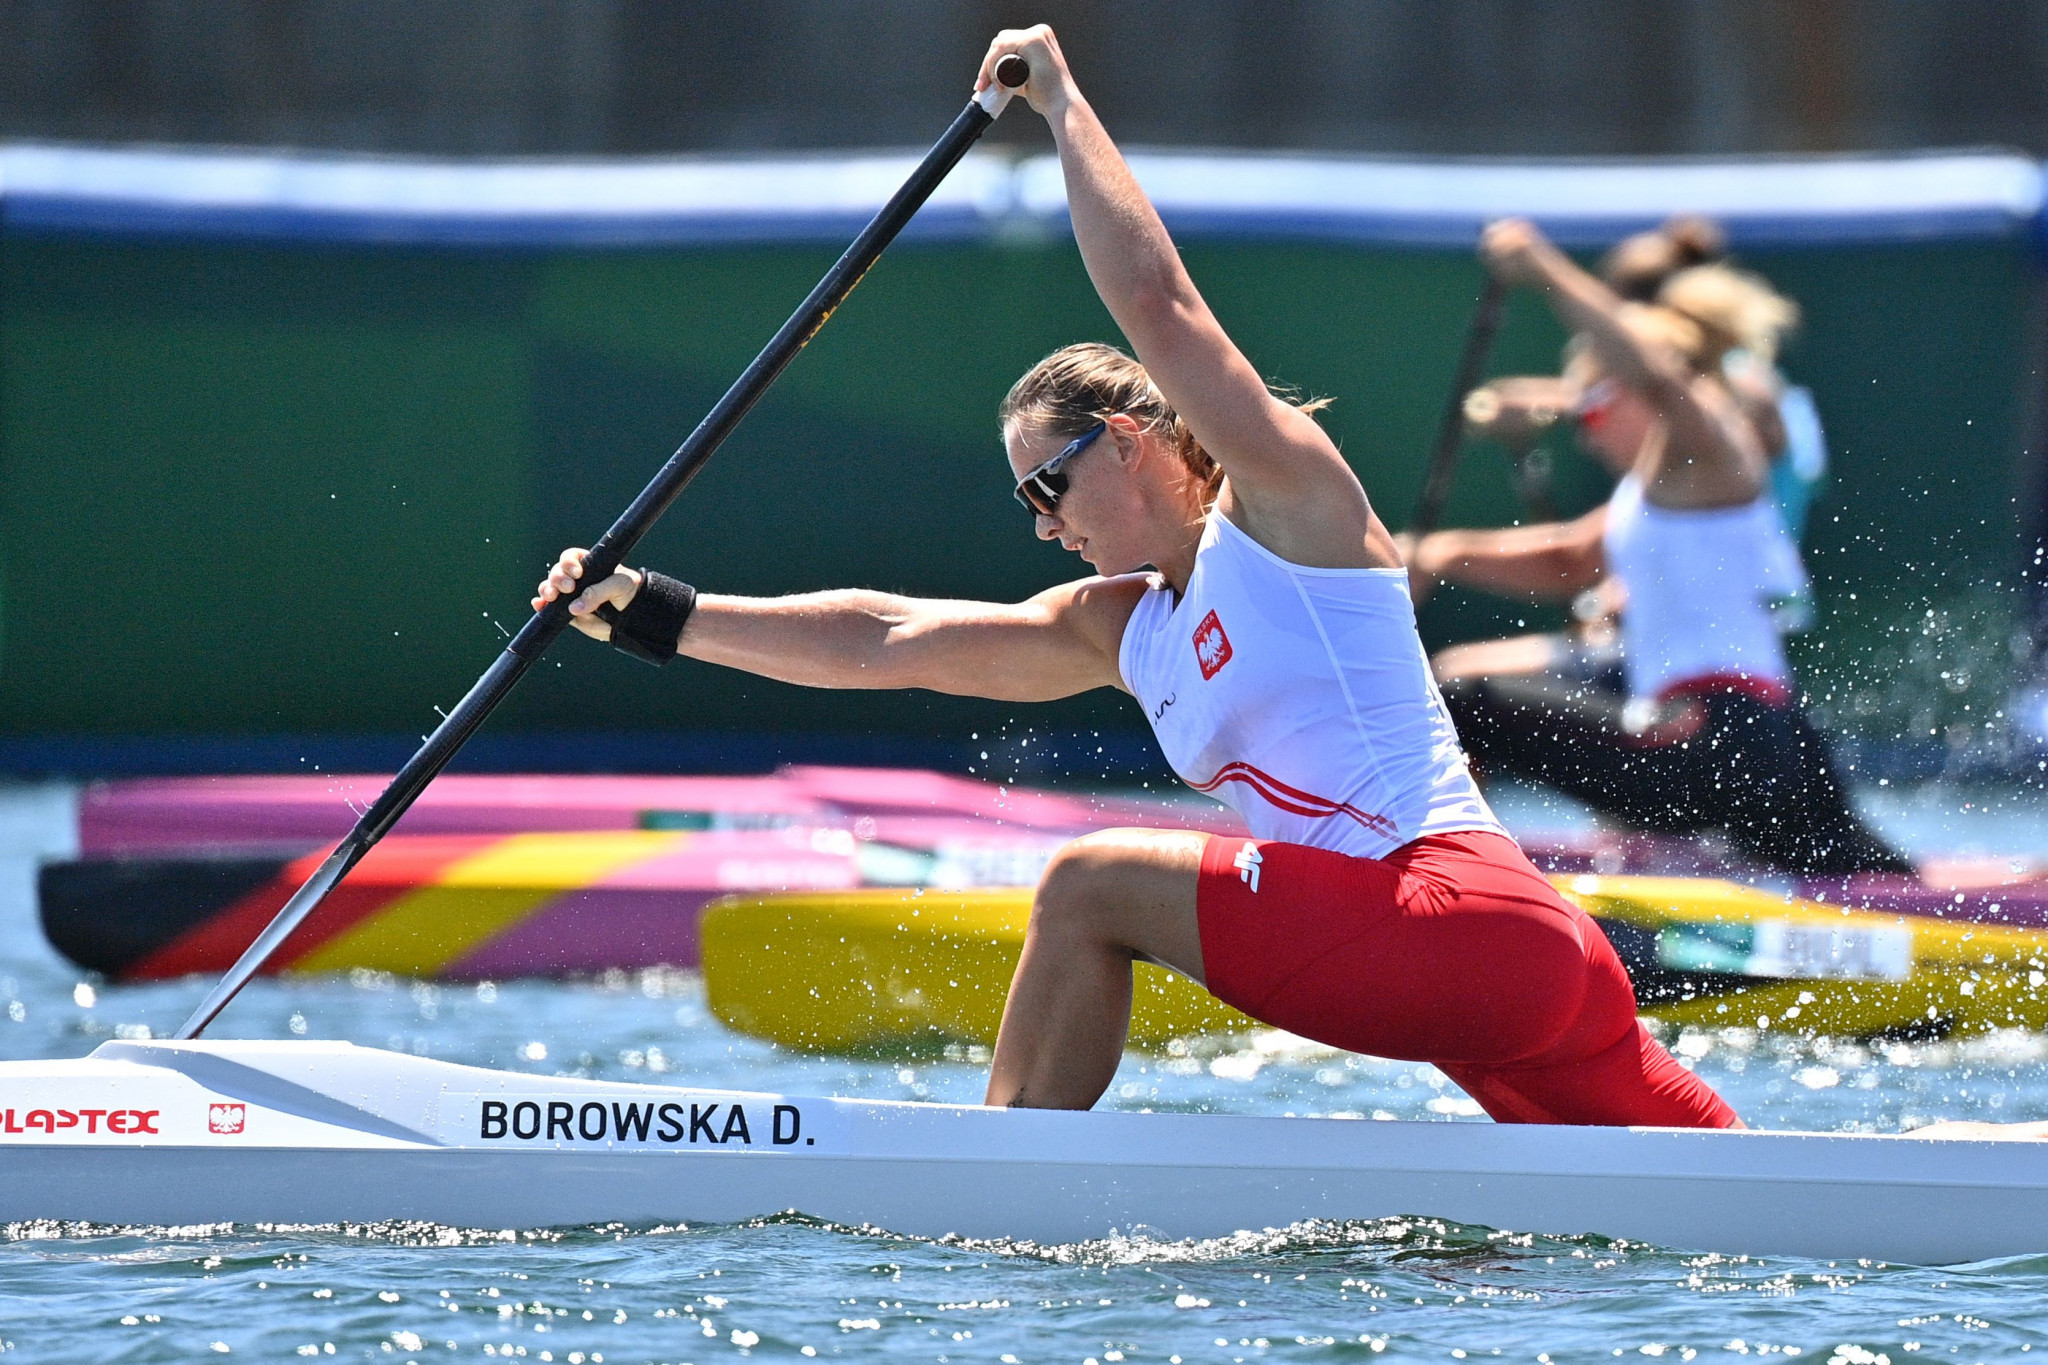 Poland's Dorota Borowska impressed in the women's C1 200m event ©Getty Images